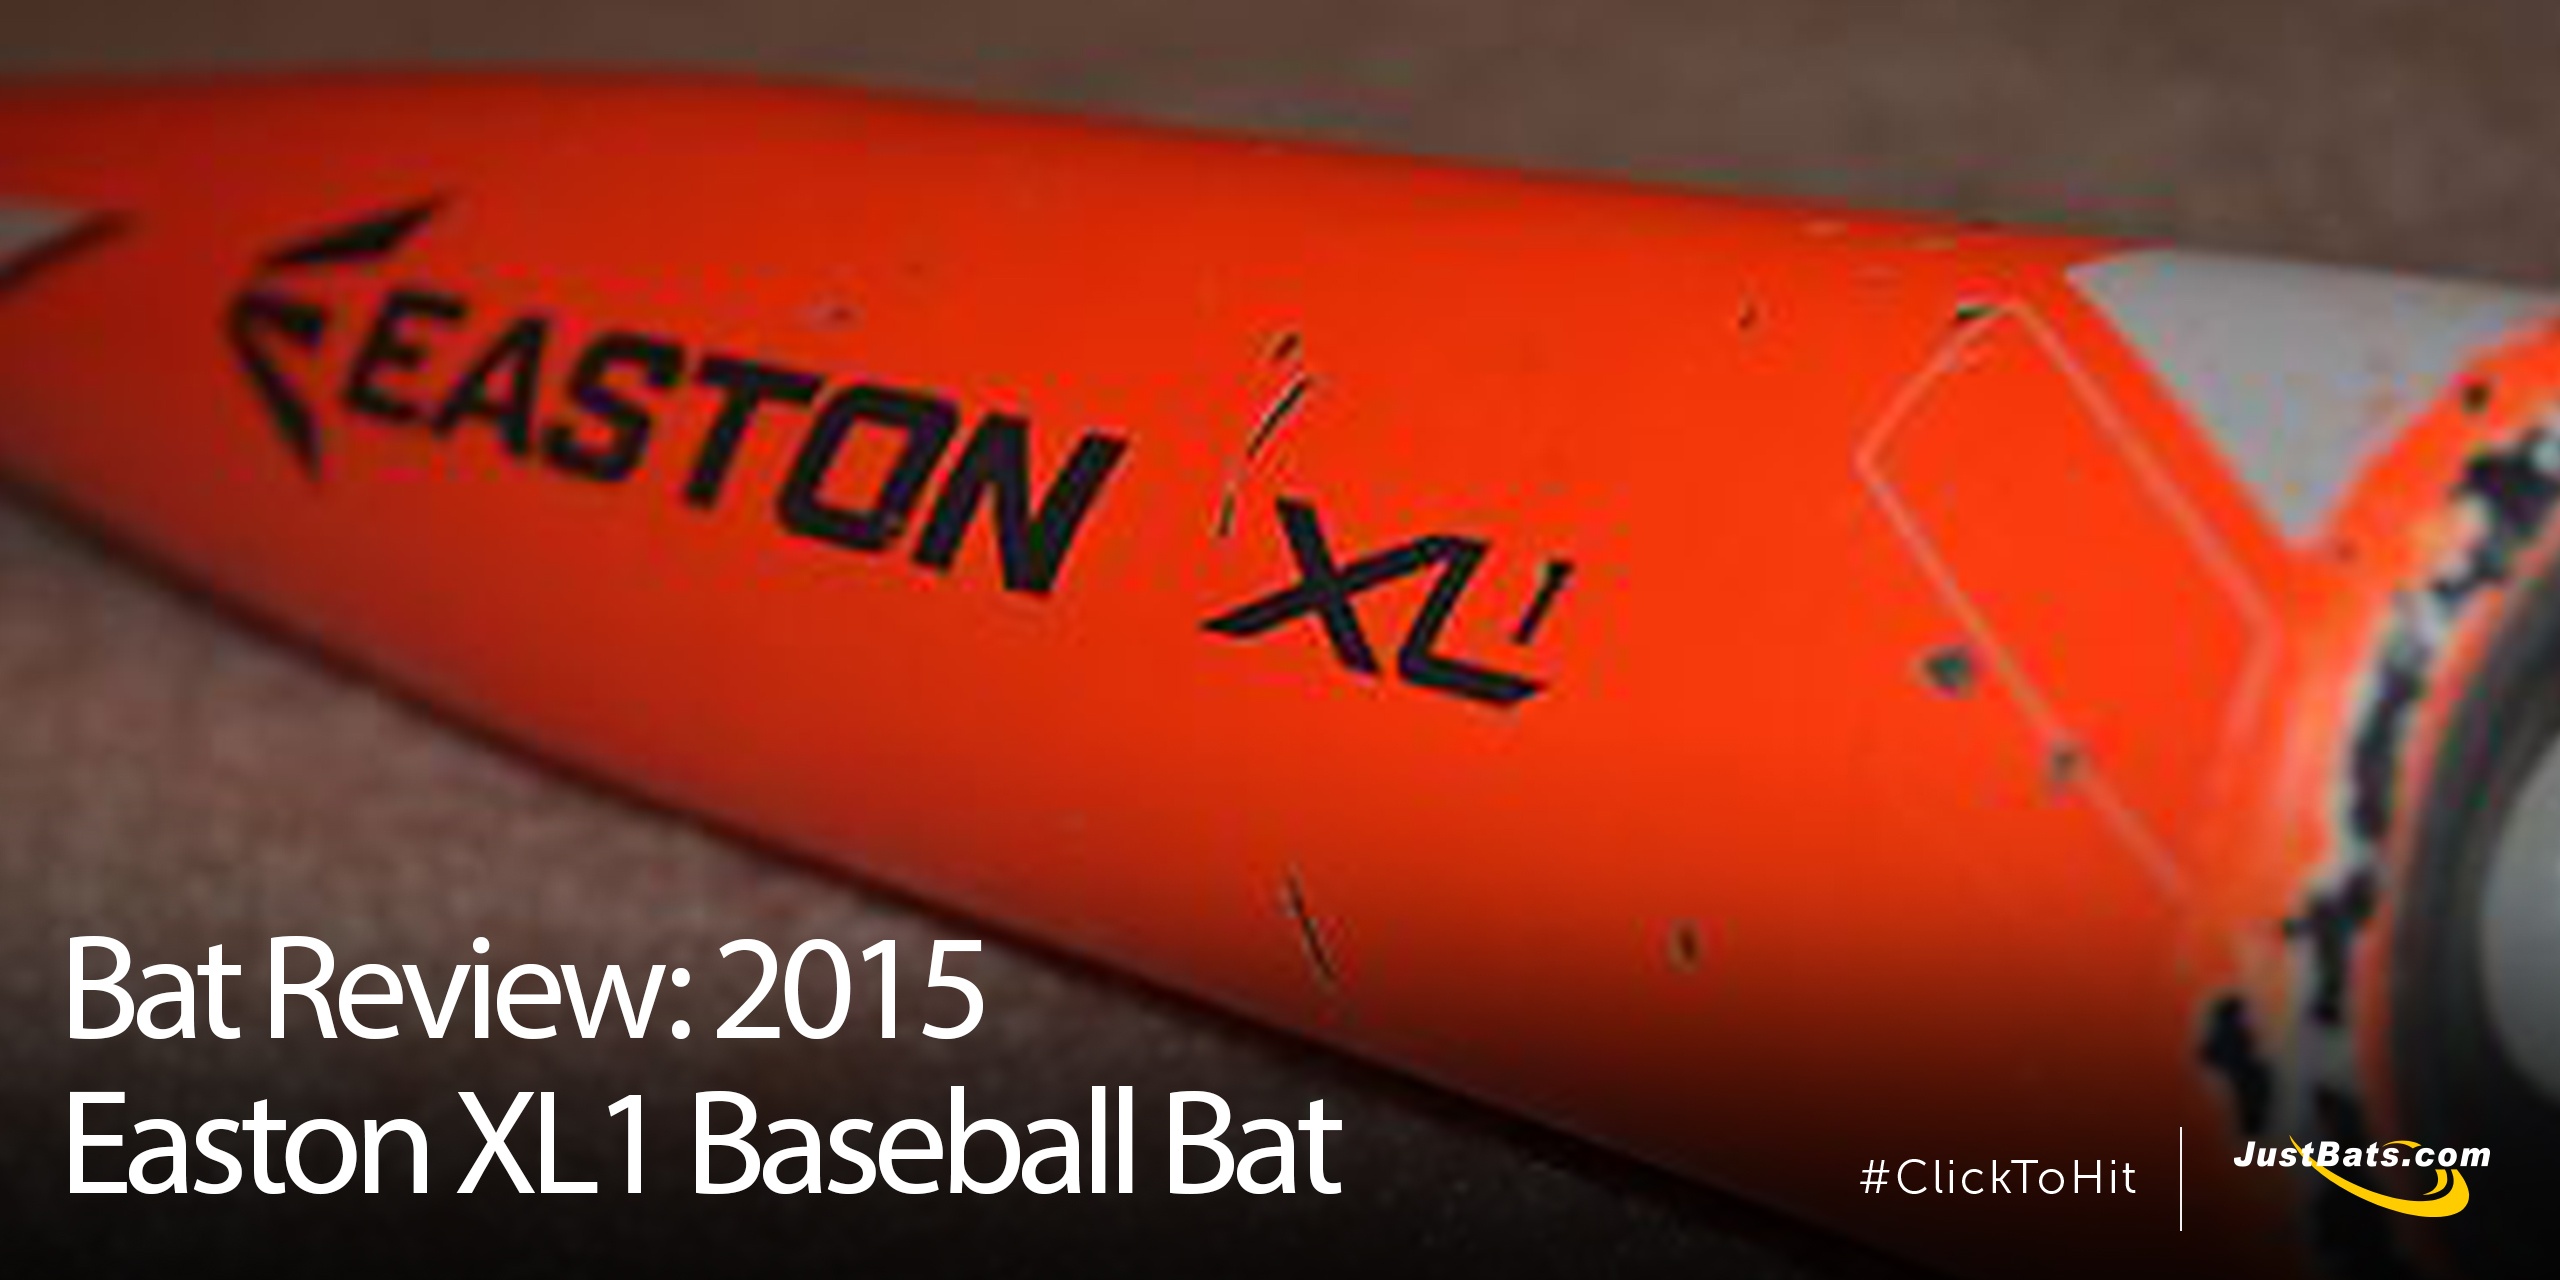 Bat Review 2015 Easton XL1 - Blog.jpg